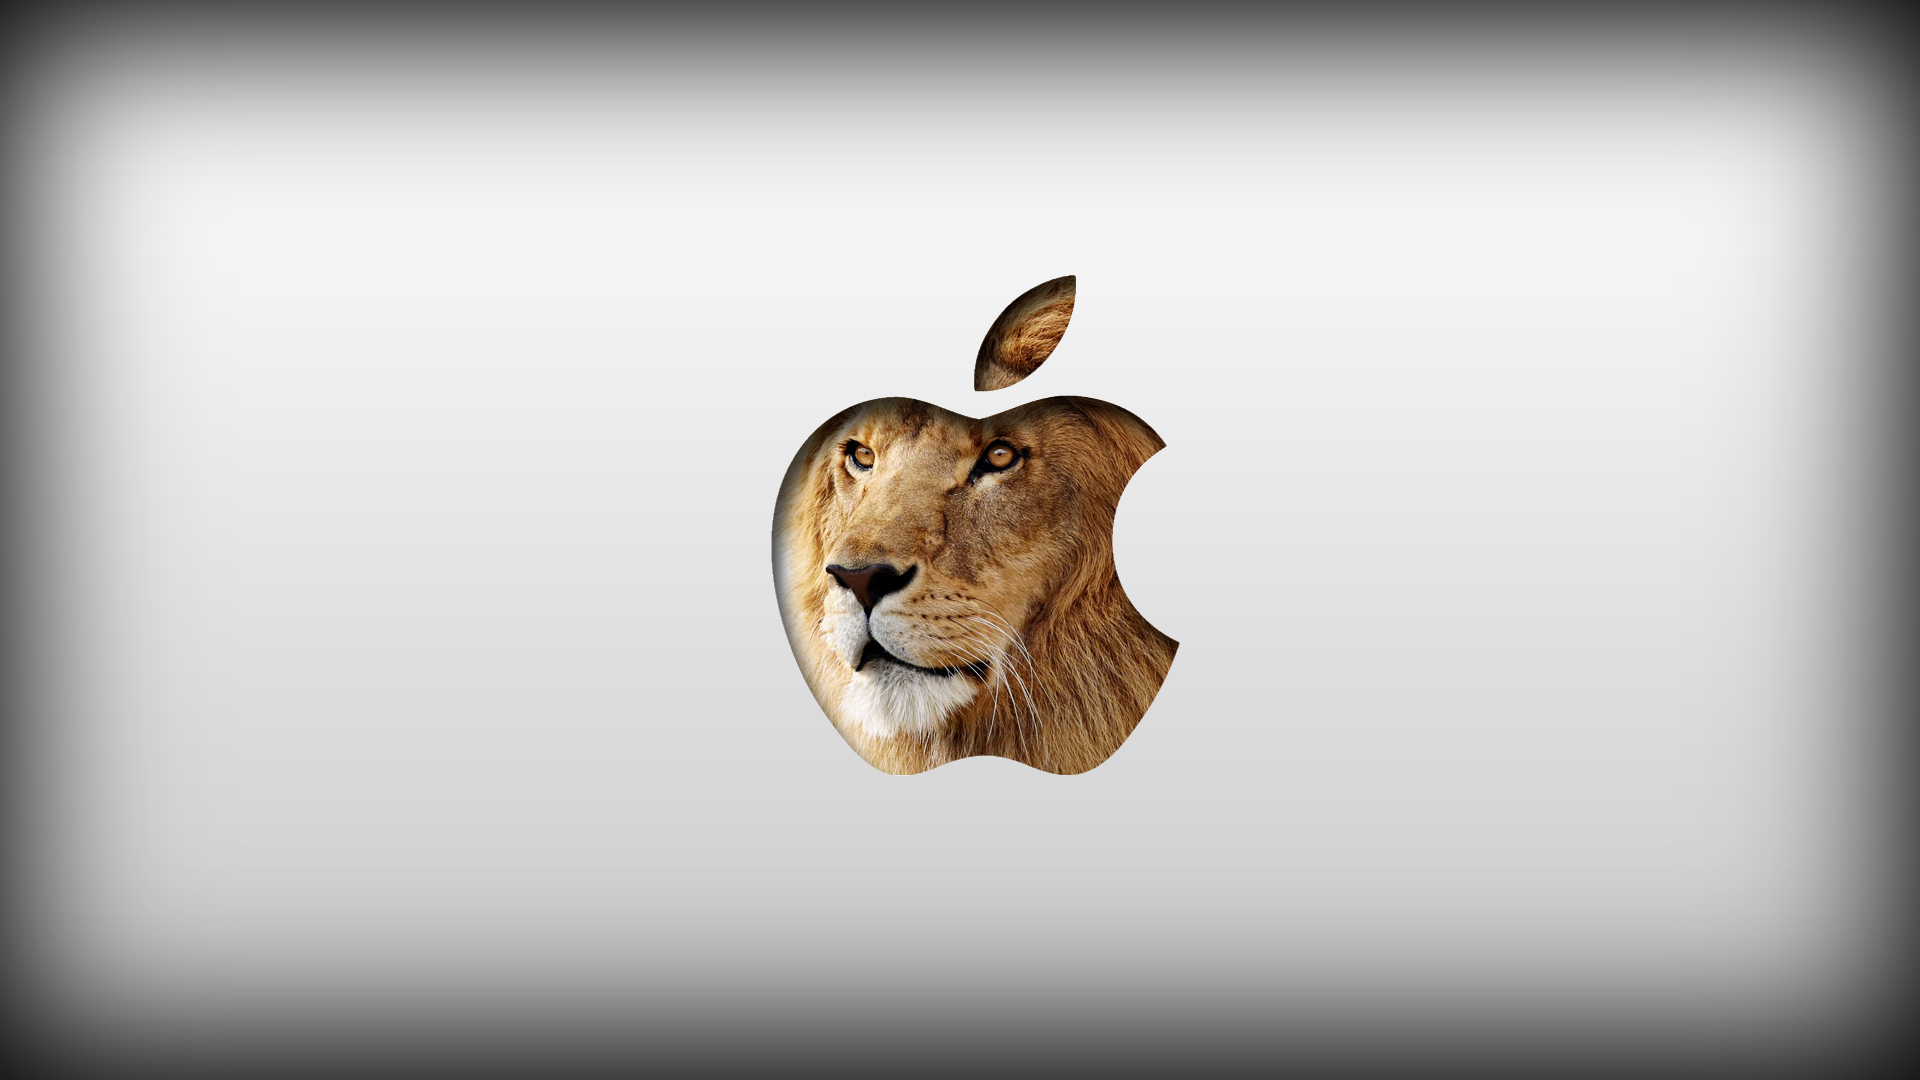 epson printer mac lion